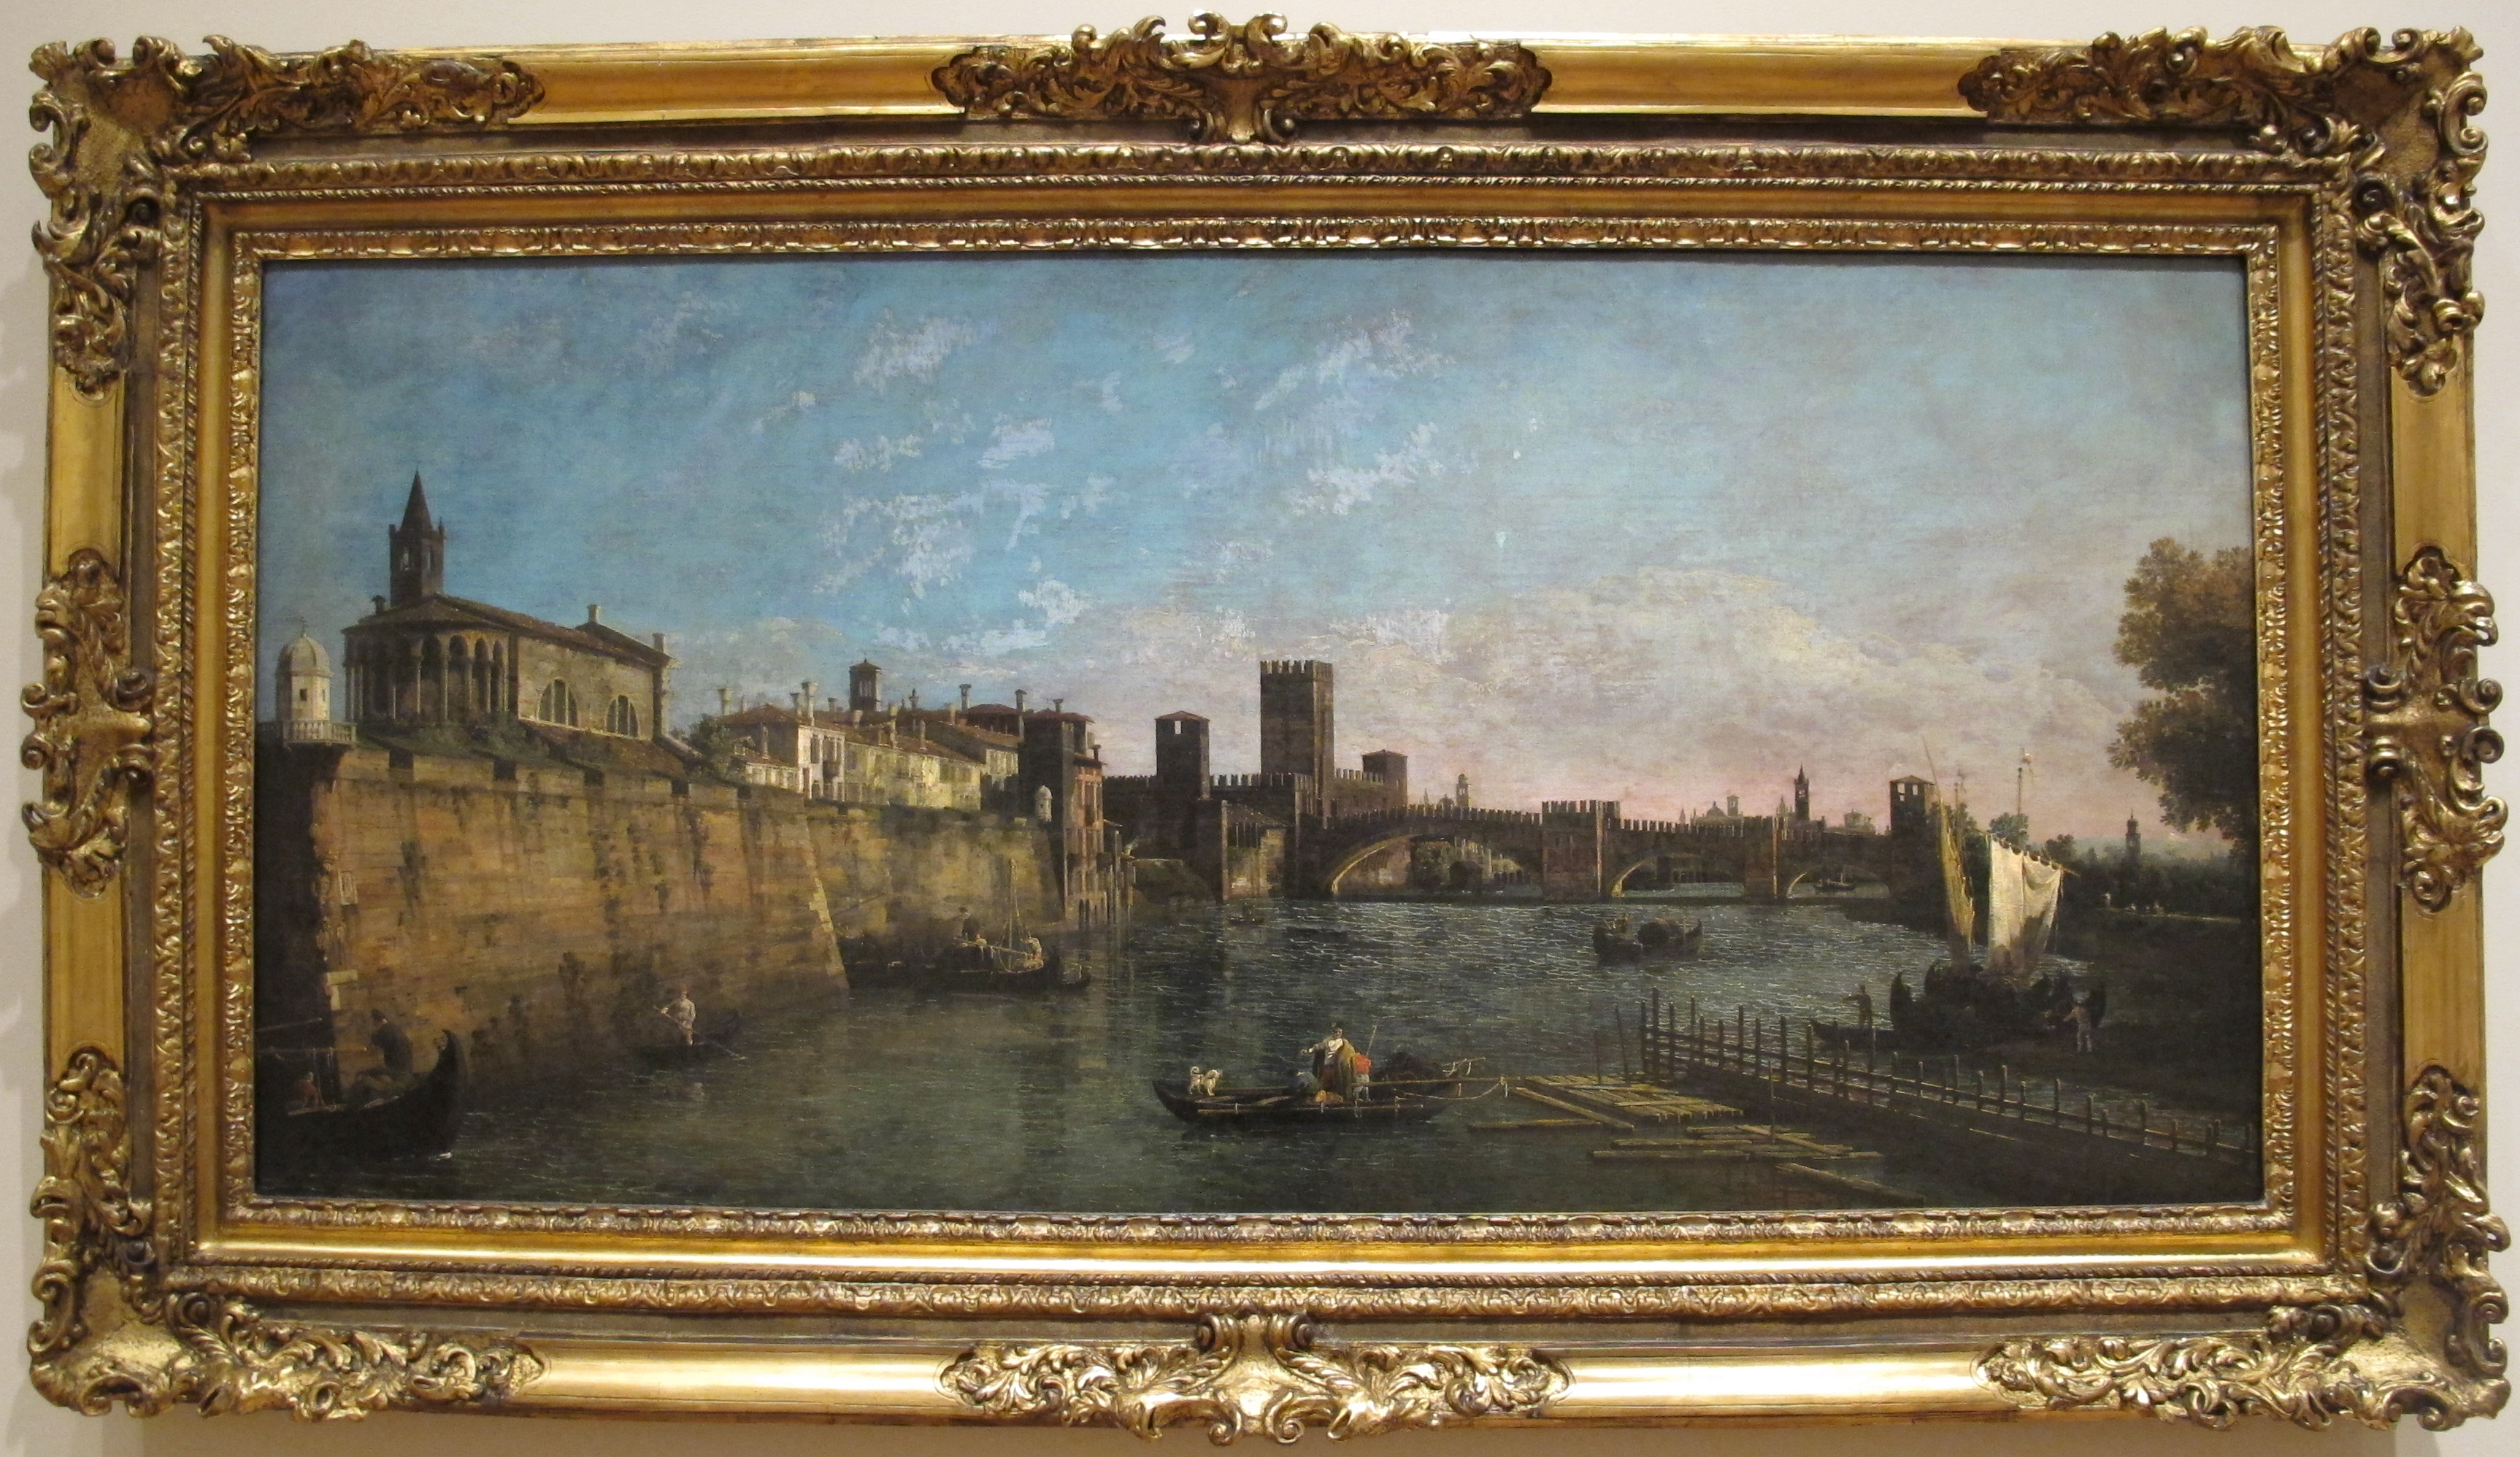 File:Ponte Ruga Bela o del Forner a Venezia.JPG - Wikimedia Commons